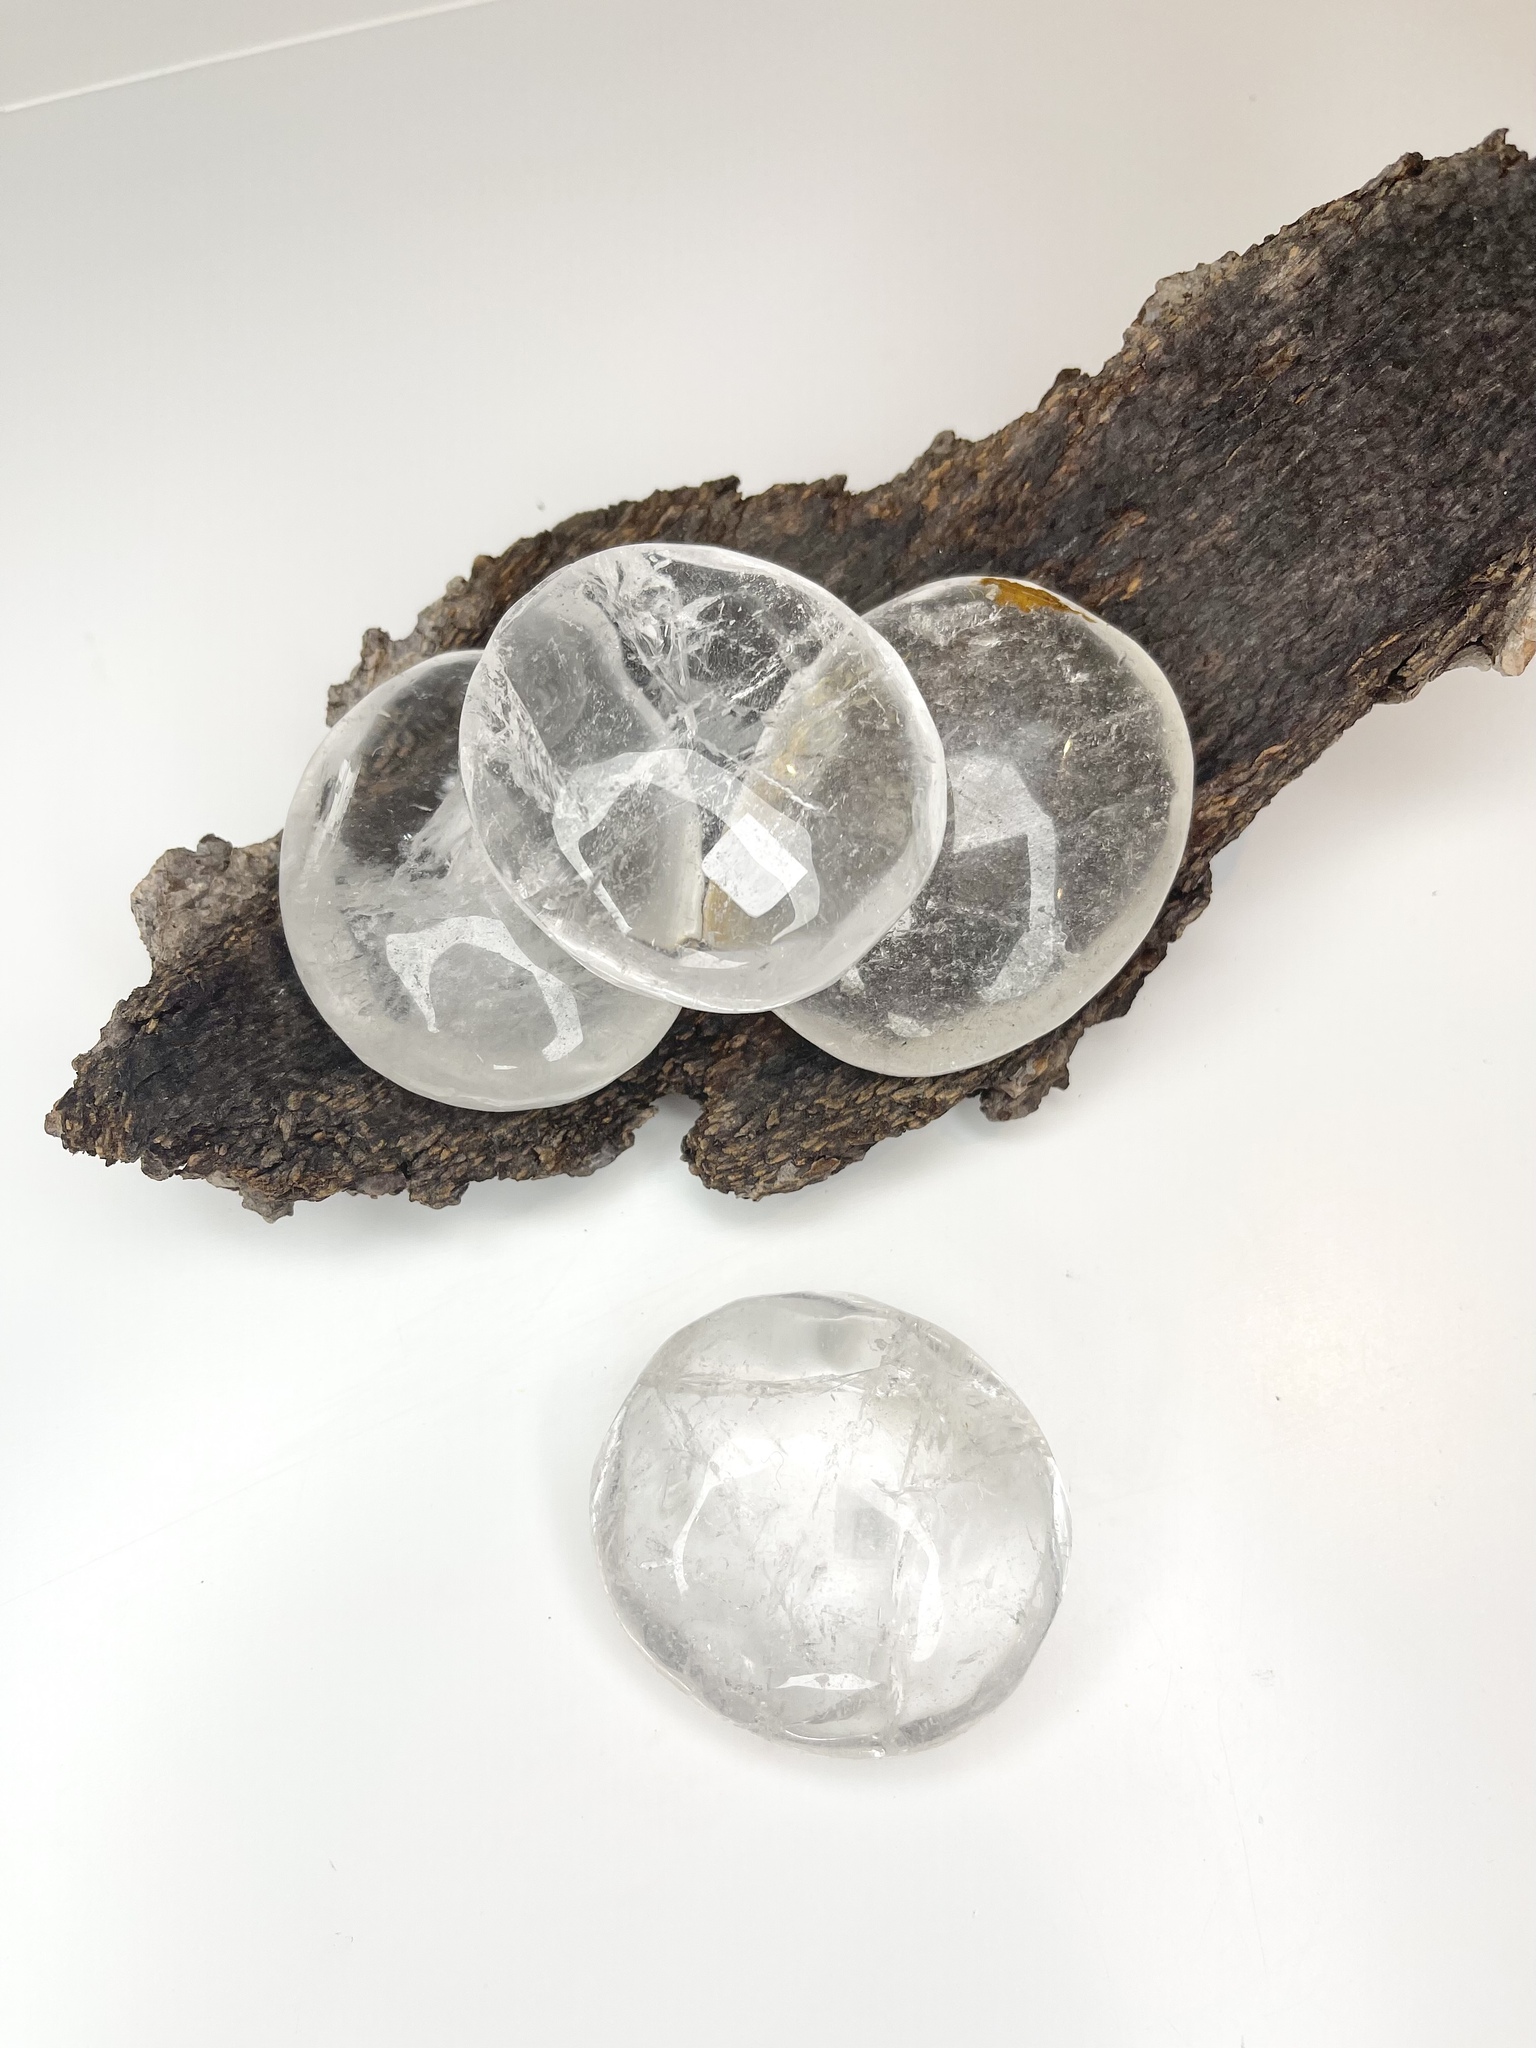 Bergskristall (clear quartz), touchstone